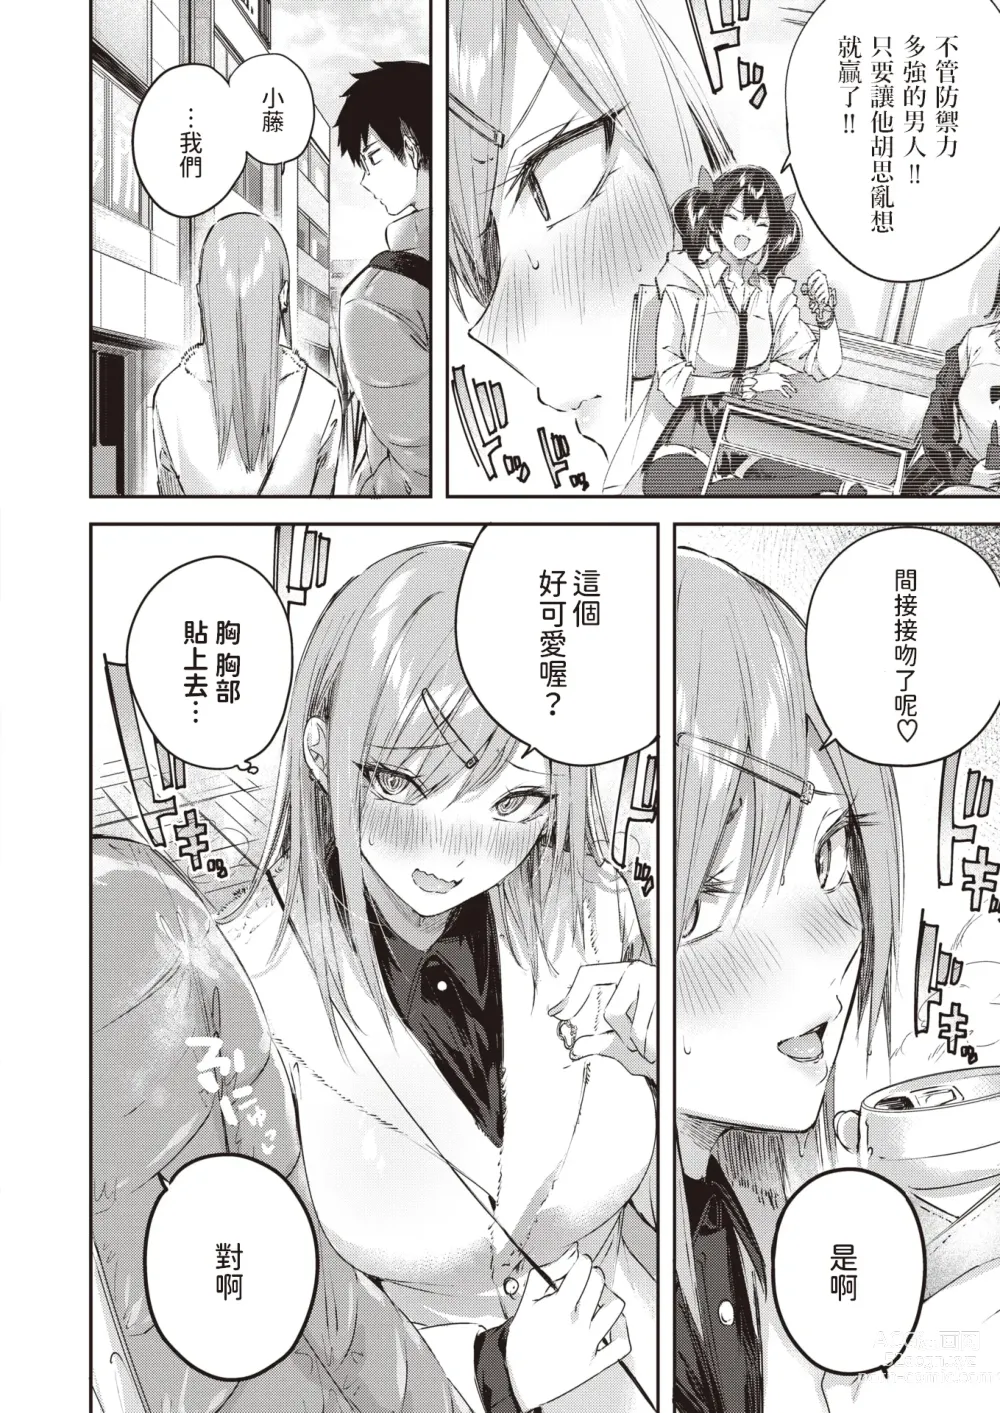 Page 6 of manga Oshi Gal to Tansaibou